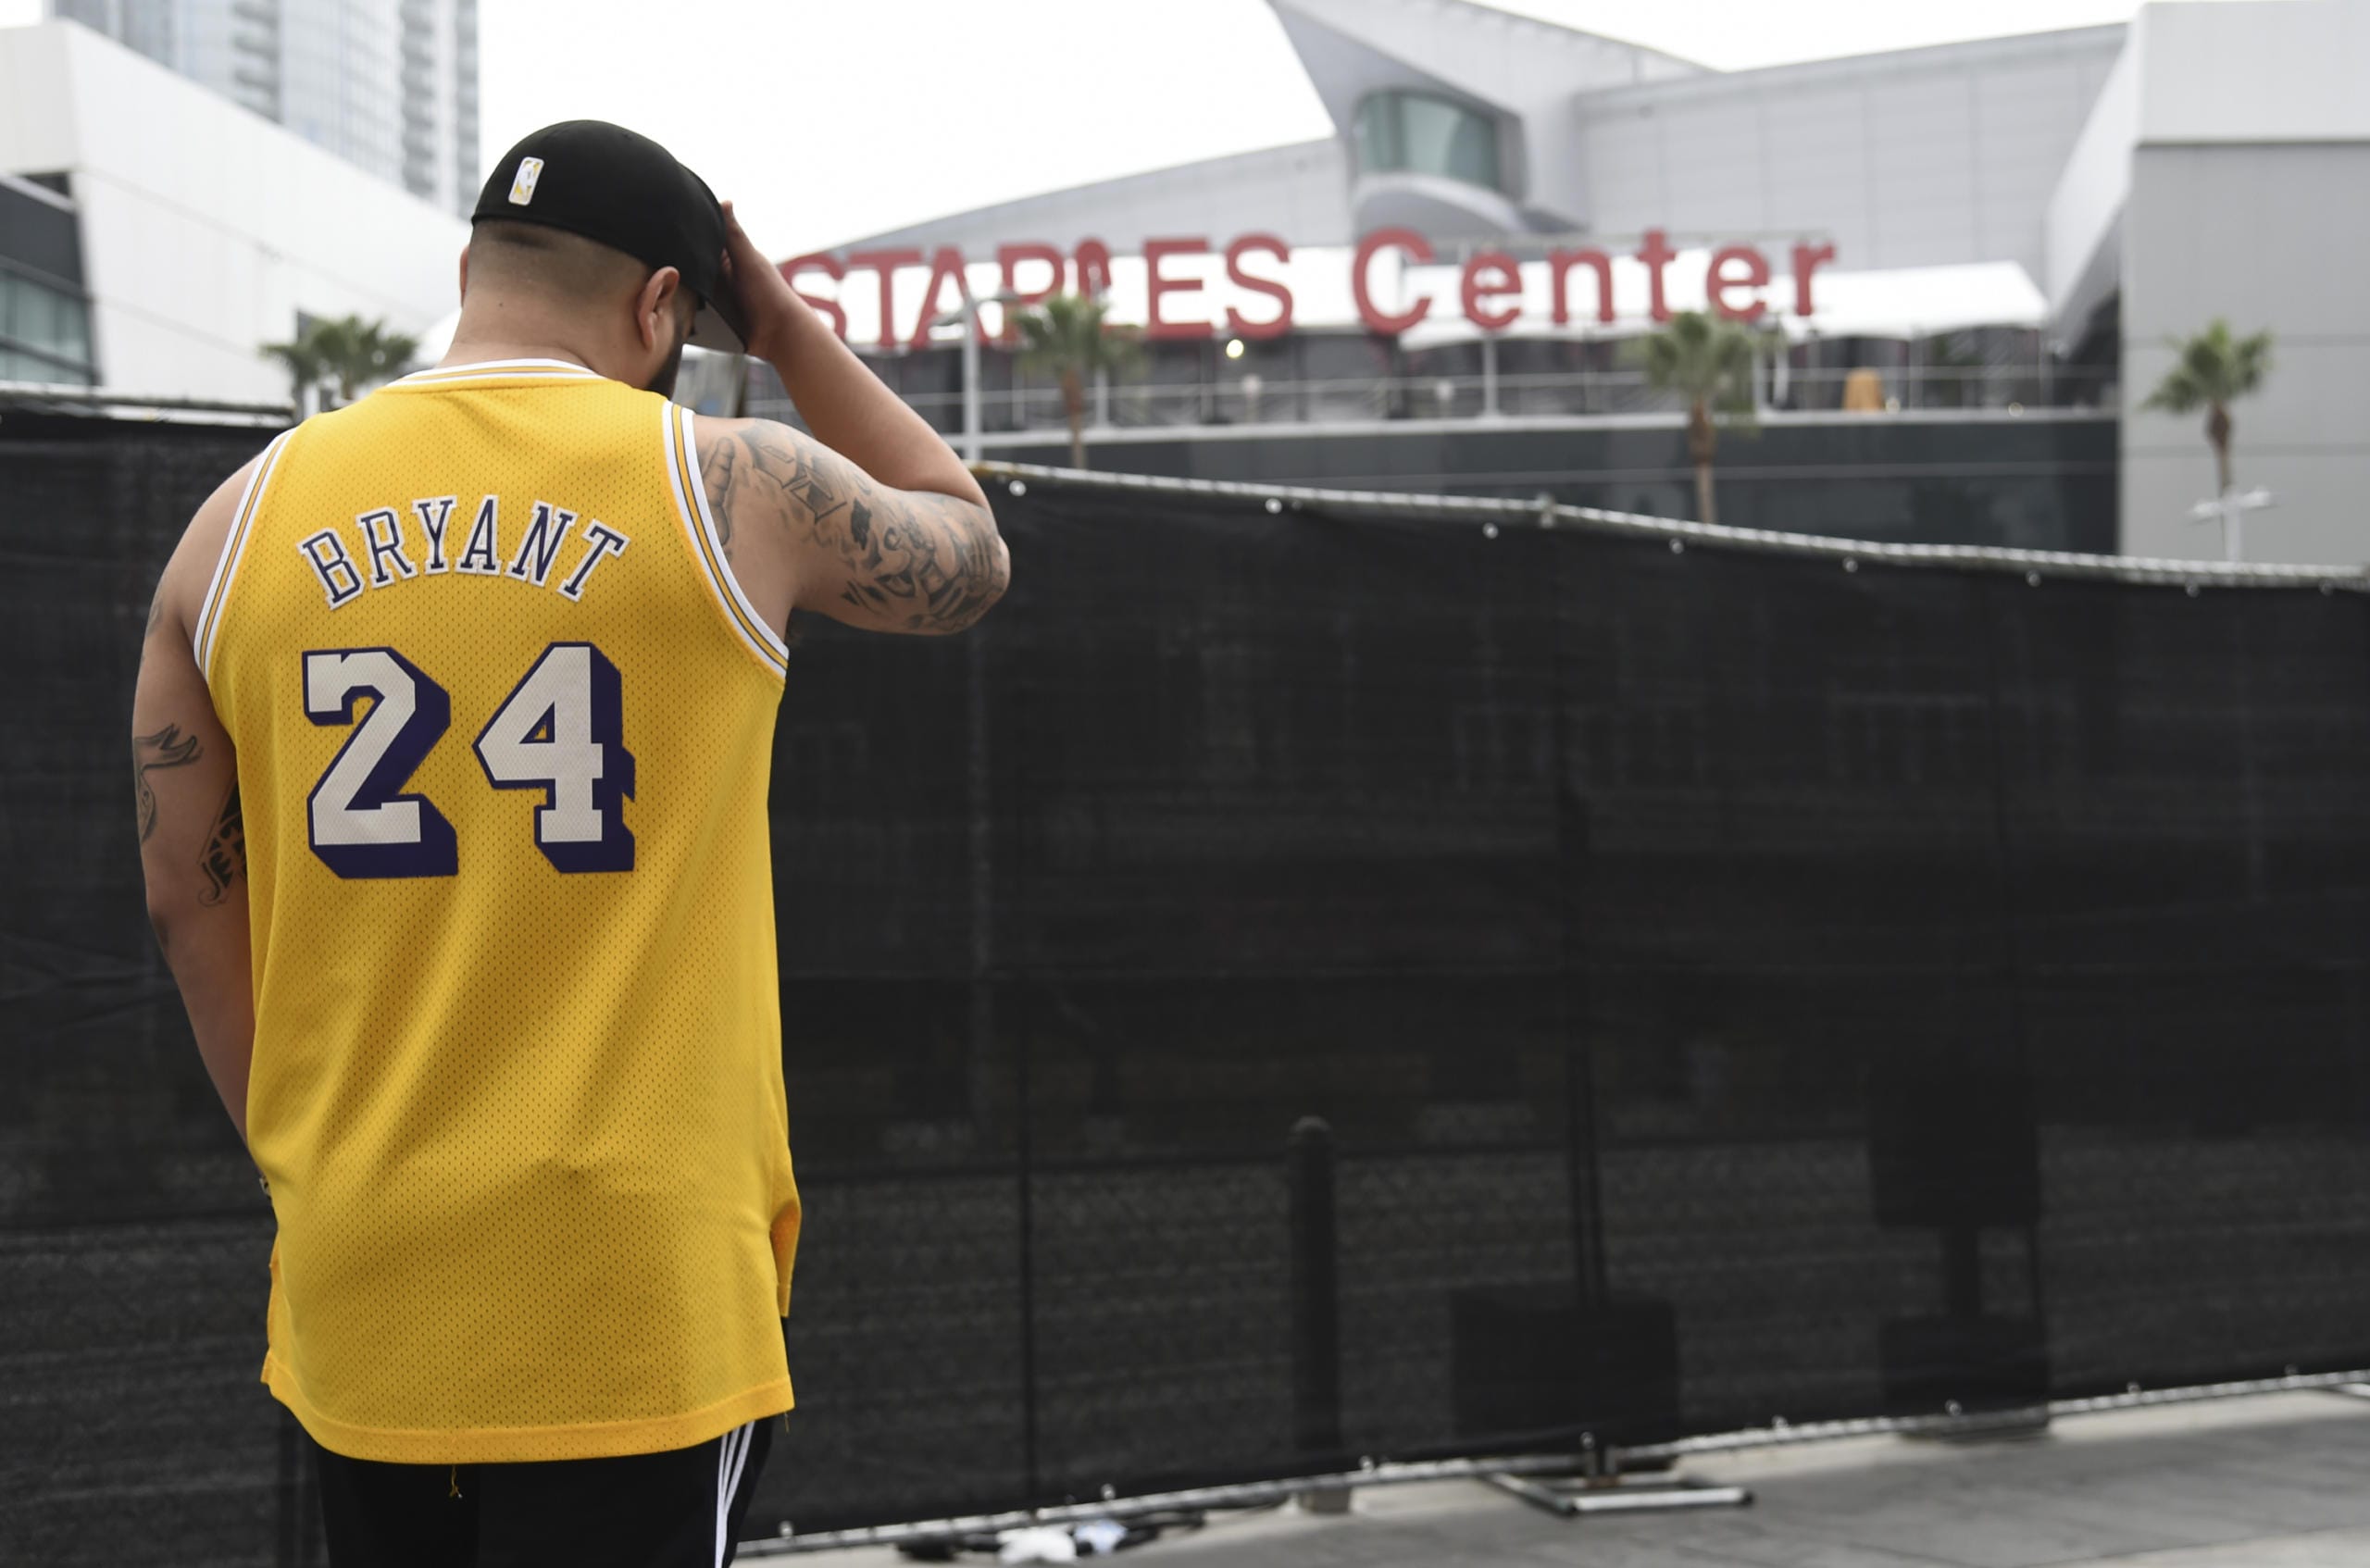 Lakers legend Jerry West drops eye-opening Kobe Bryant-Grizzlies